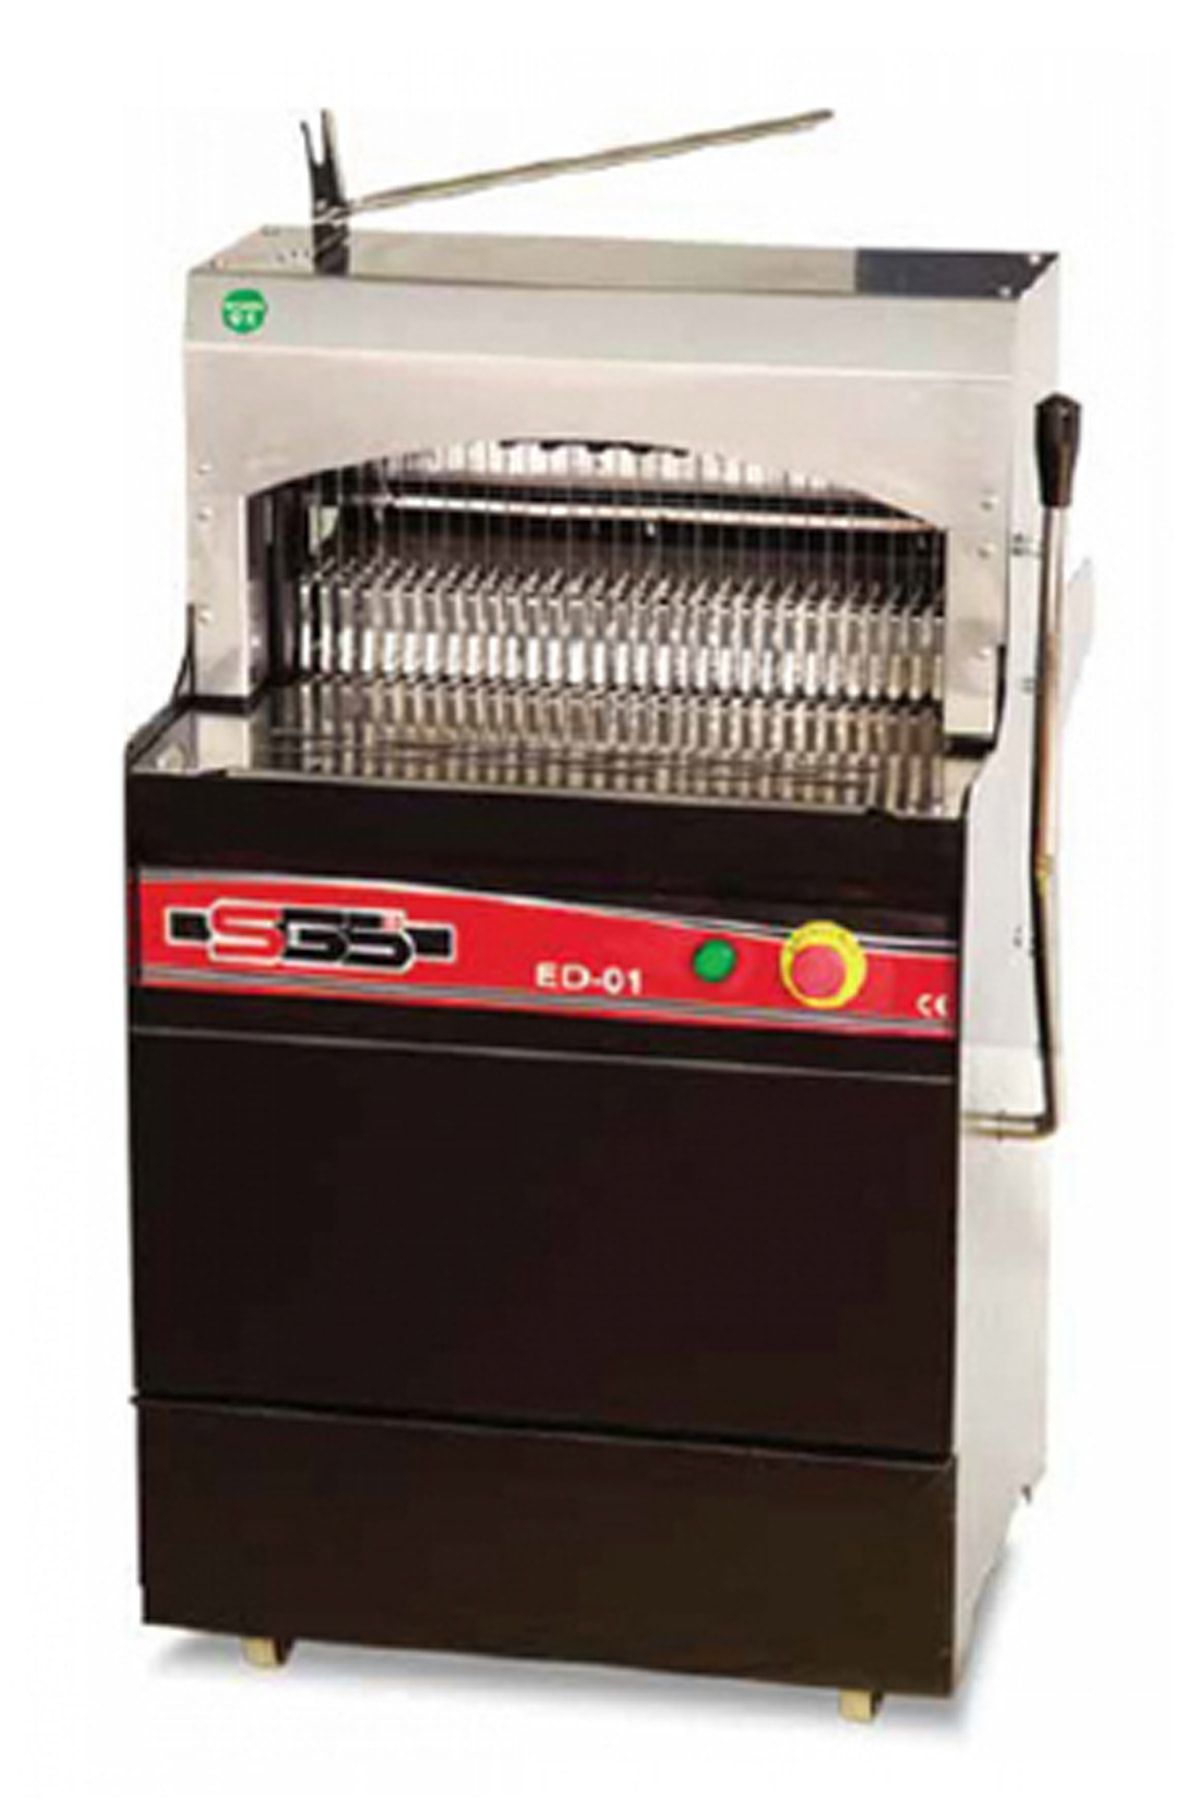 SGS OVEN Sgs Ekmek Dilimleme Makinesi Edk Endüstriyel Profesyonel